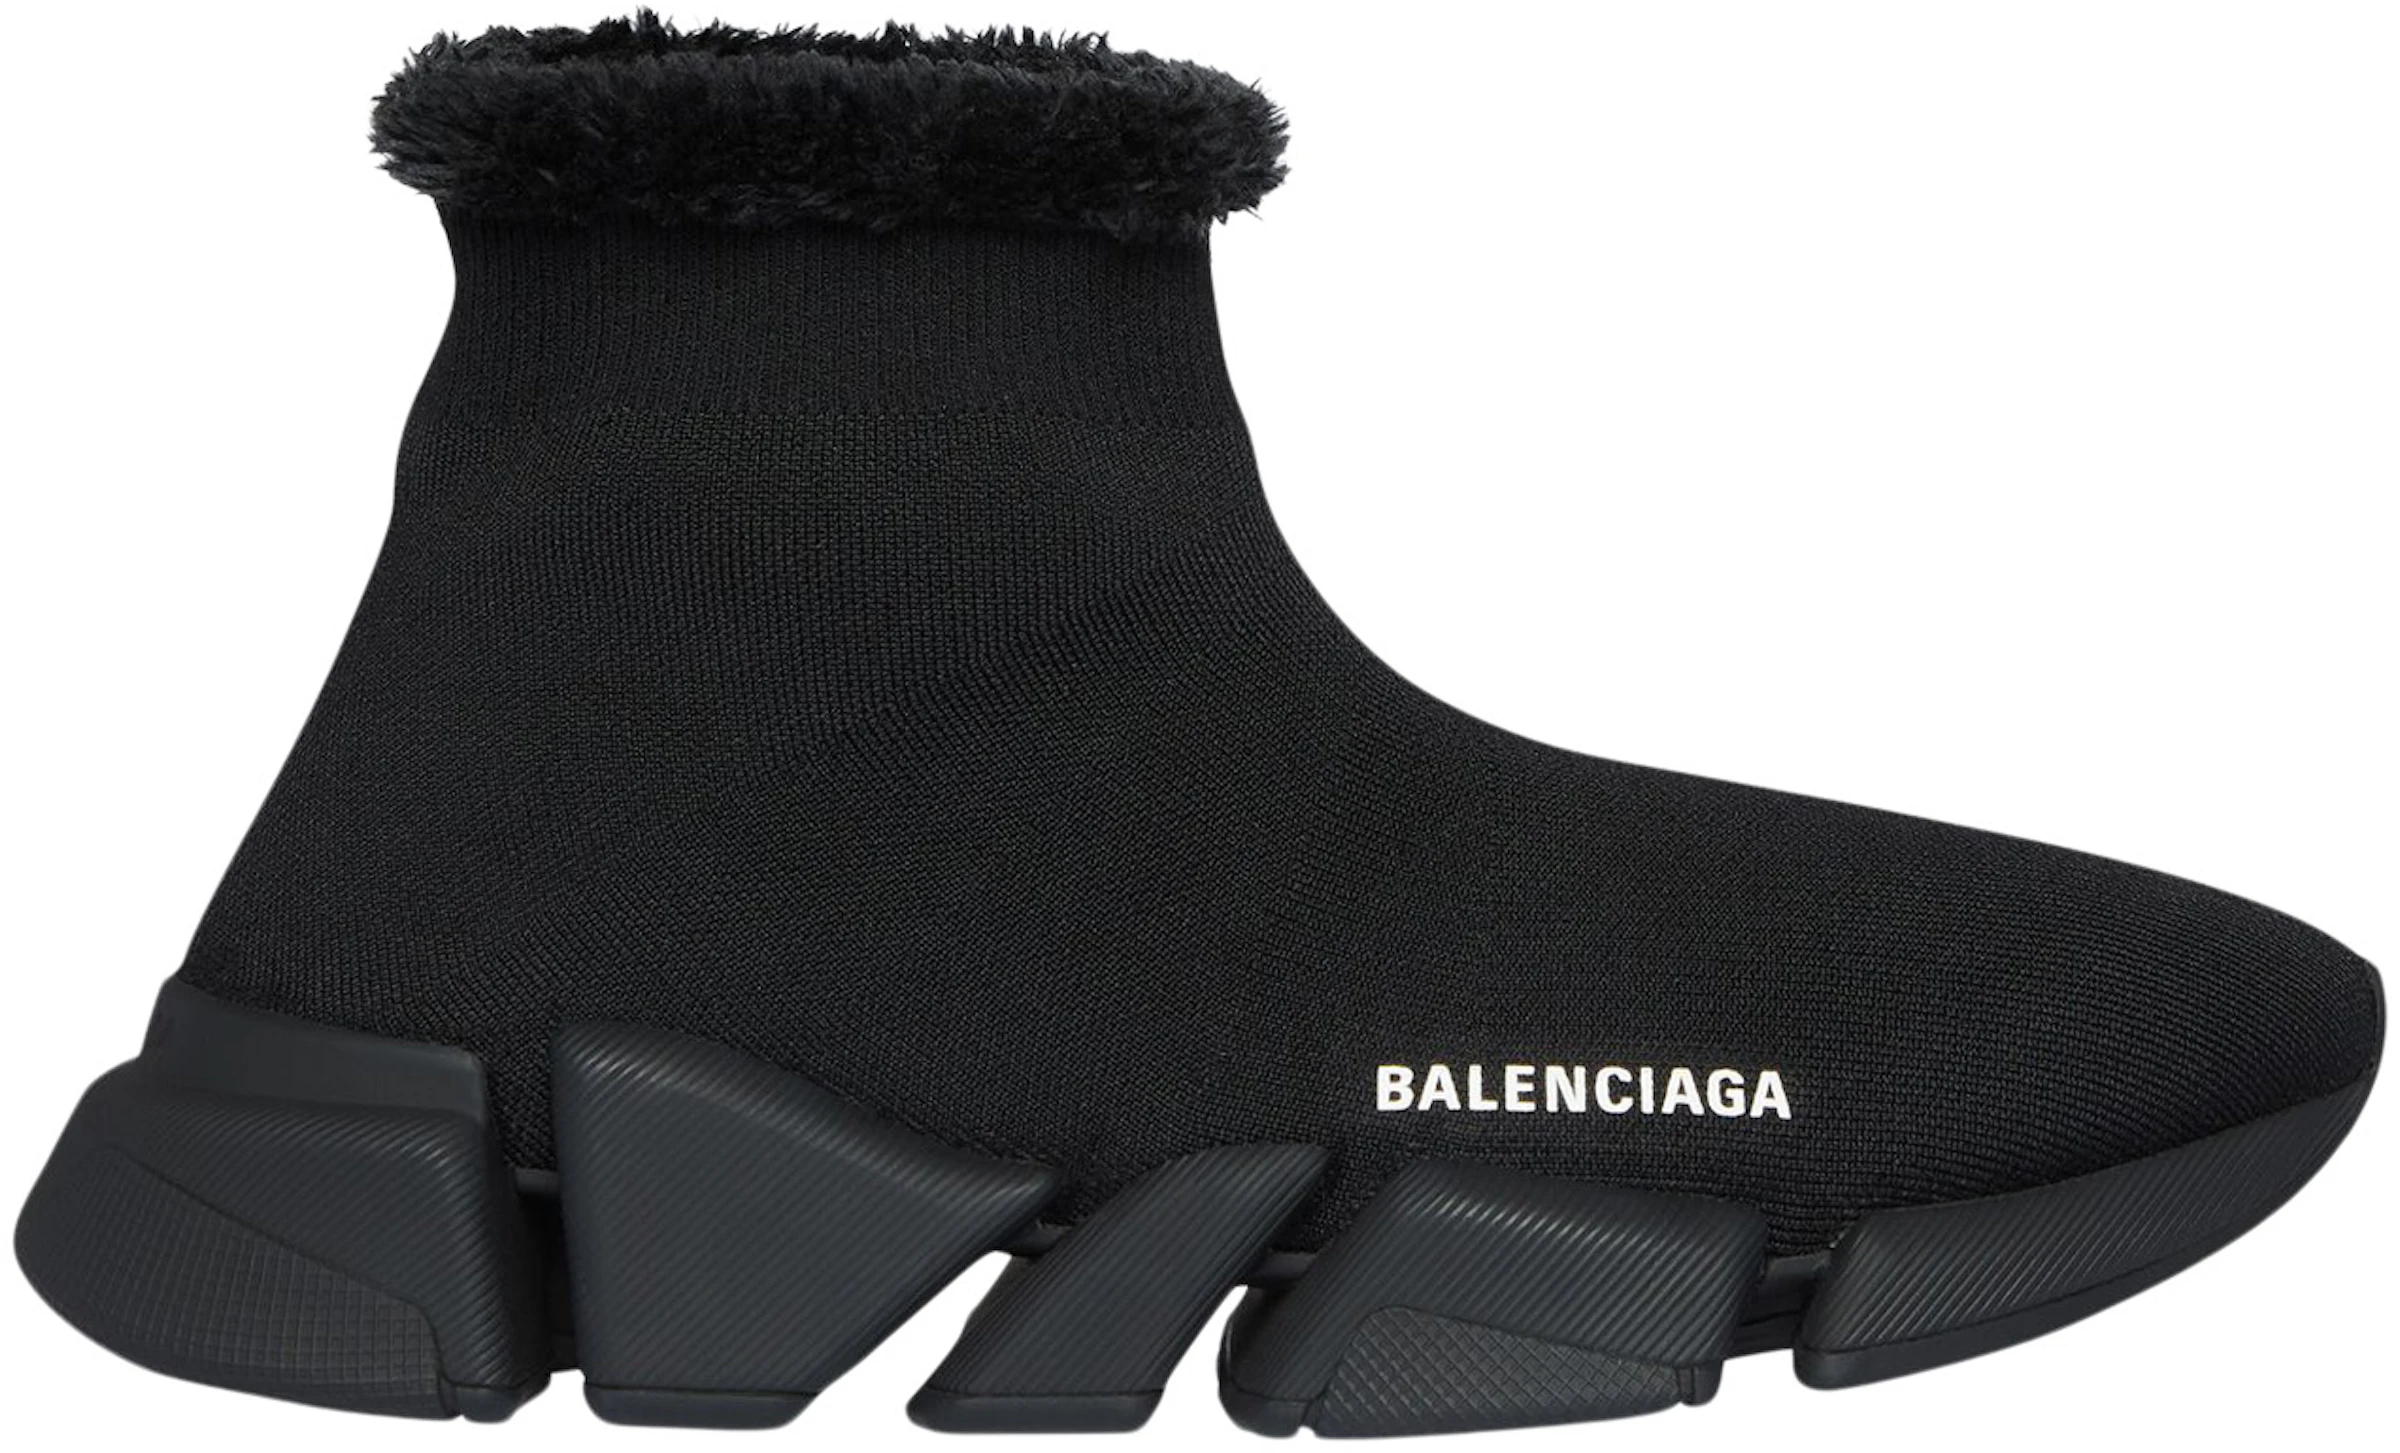 Balenciaga Speed 2.0 Recycled Fake Fur Black (Women's) - 669789W2DI31000 US